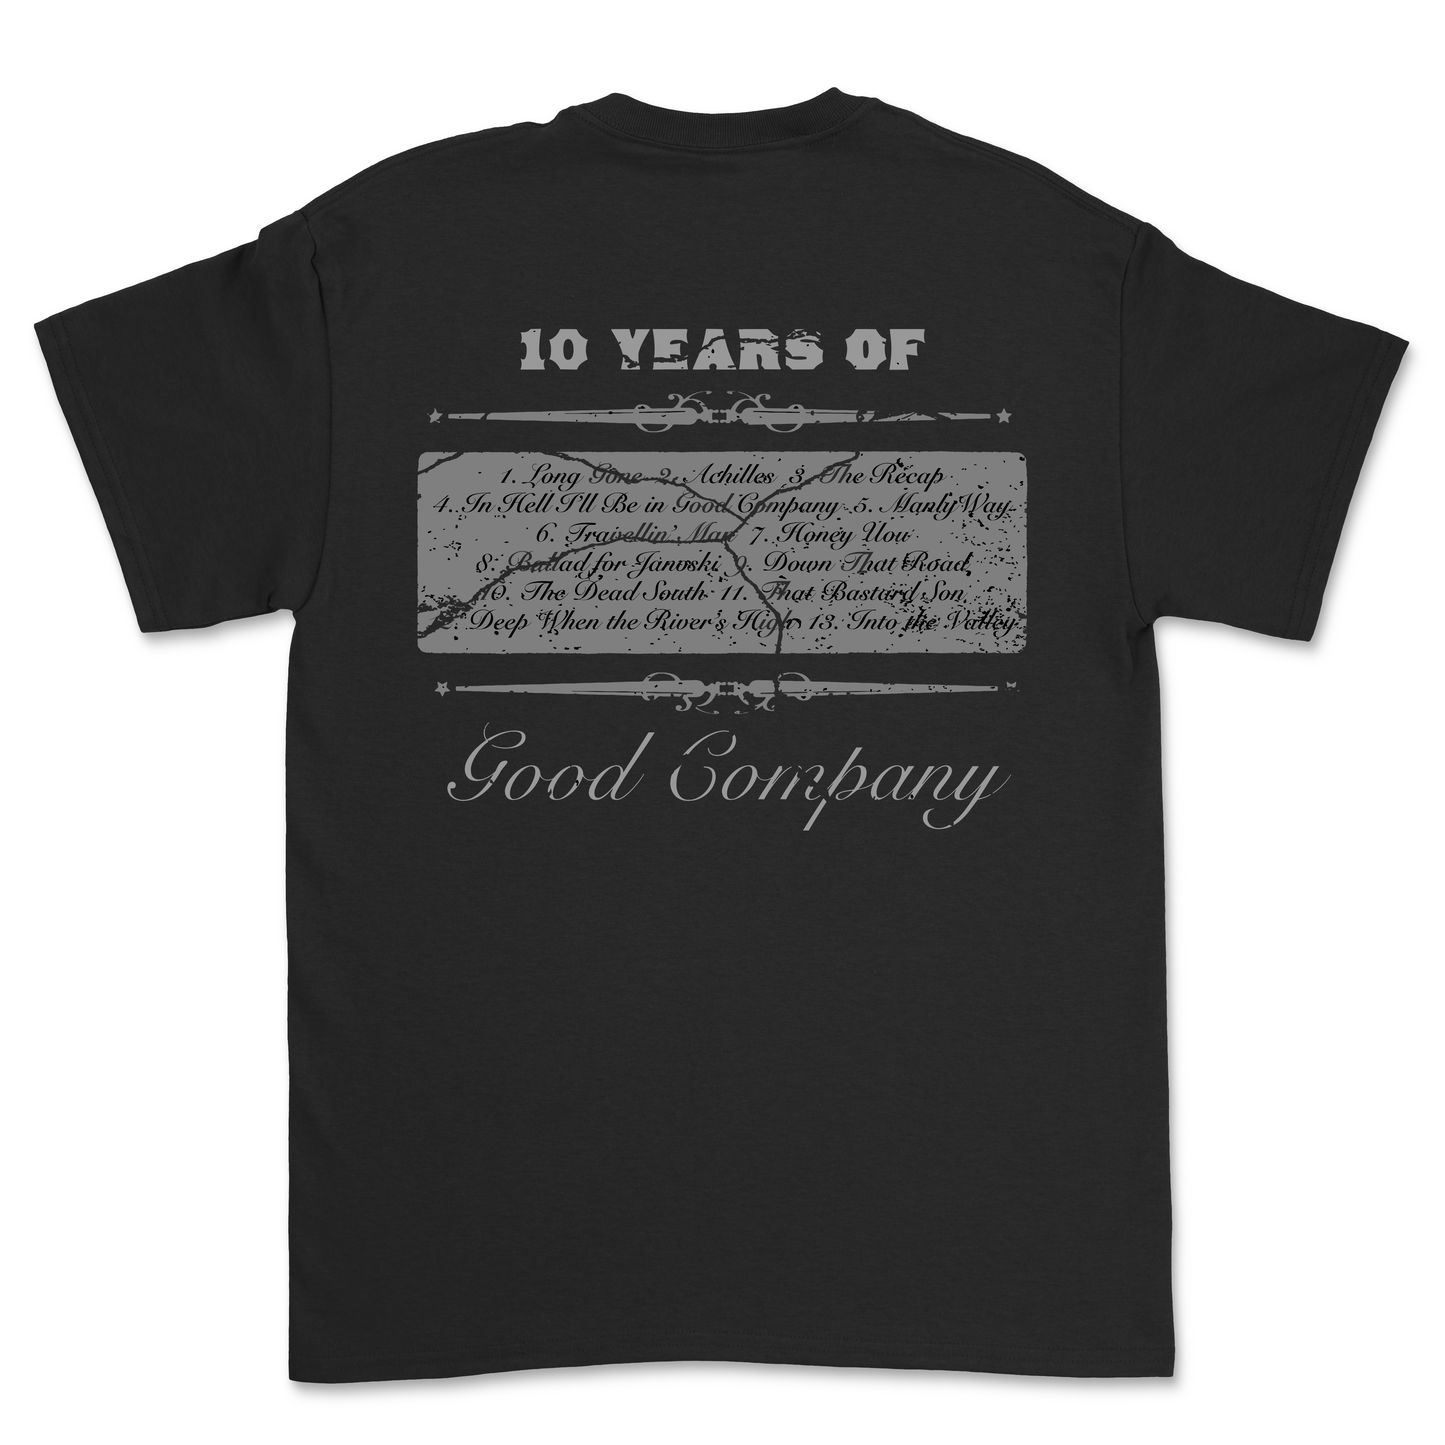 10 Years of Good Company T-Shirt